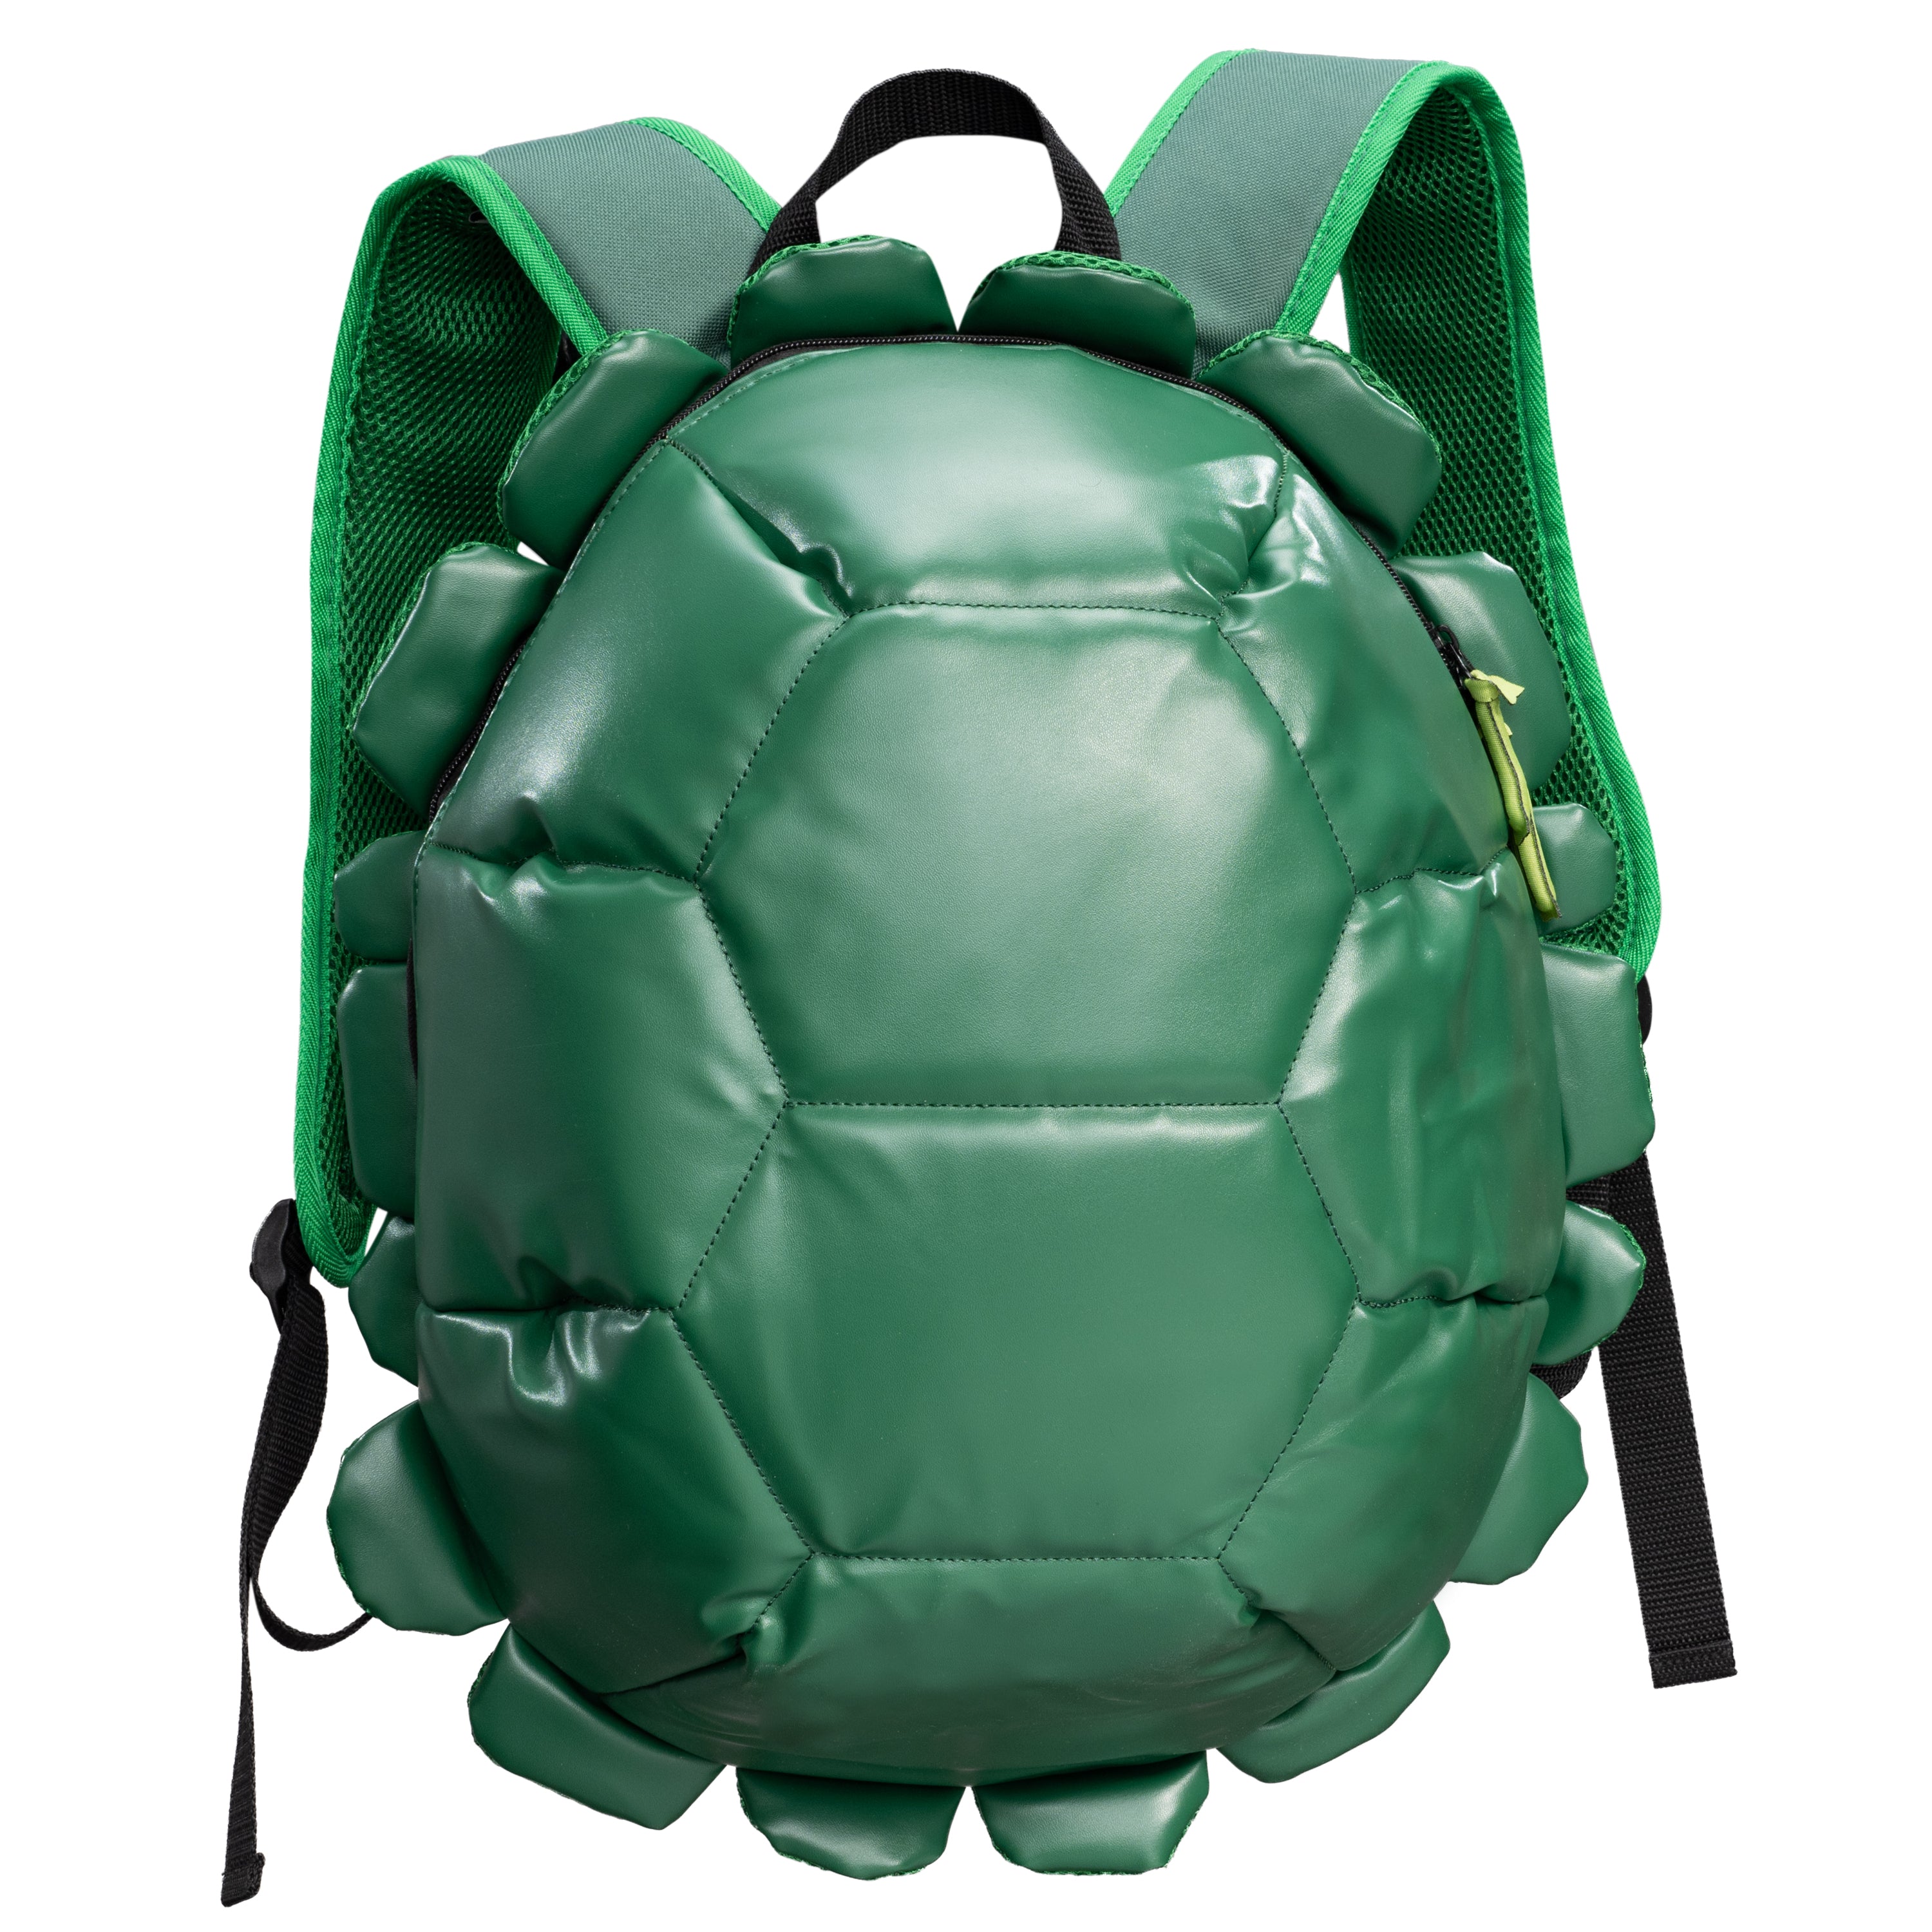 Teenage Mutant Ninja Turtles Shell Backpack with Weapons